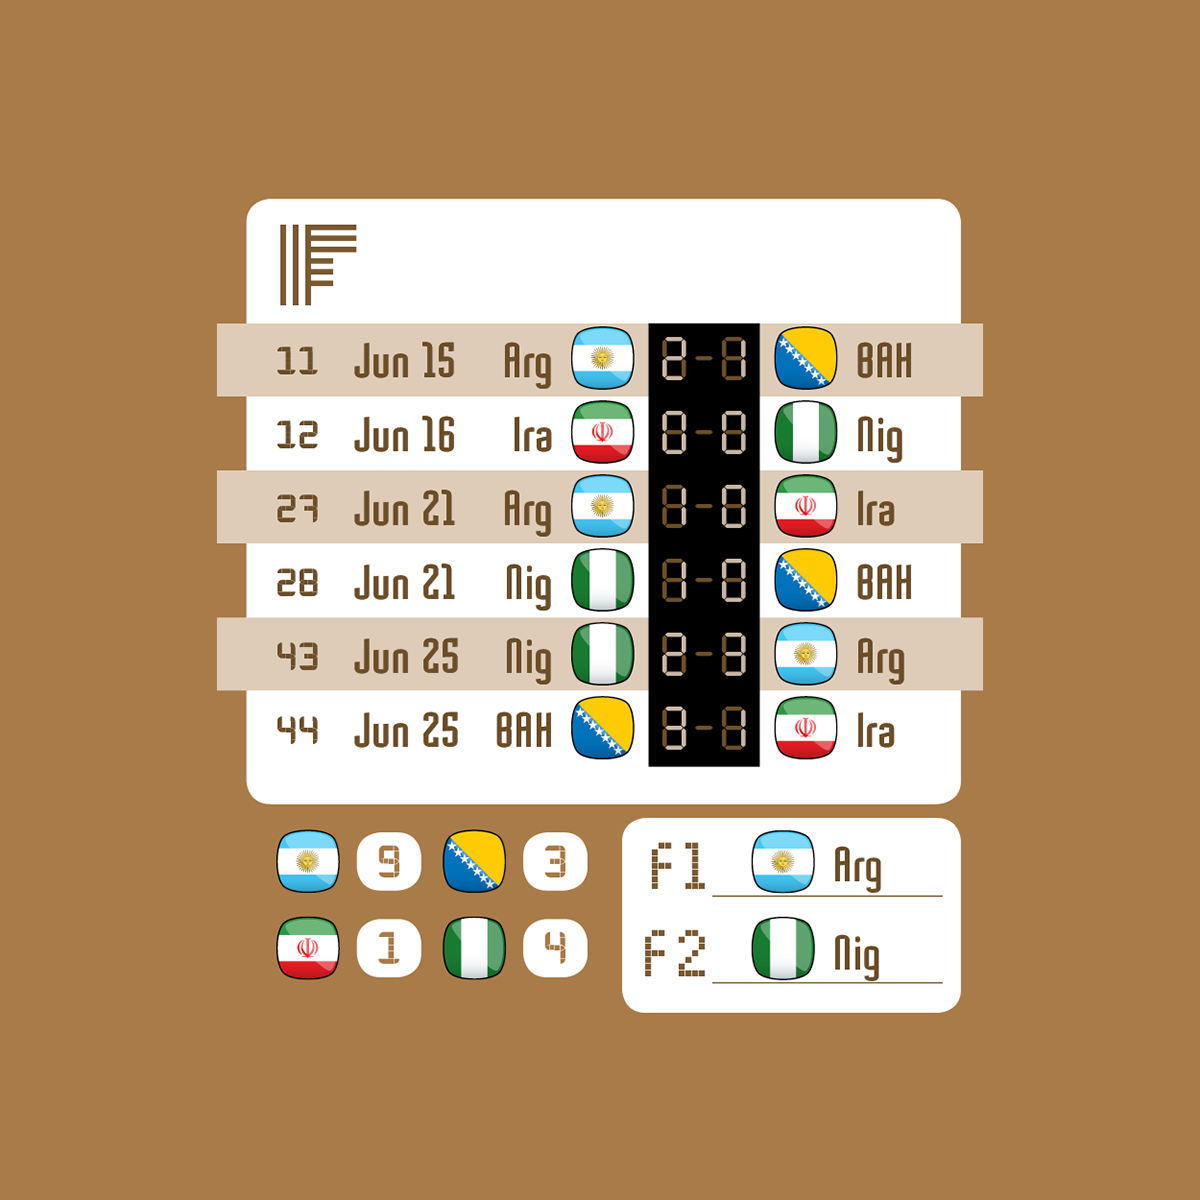 Typeface calendar FIFA world cup Mr. Pascal Miss Liz Pixa Square black type font Typefamily Mr. Black Fonts Brazil 2014